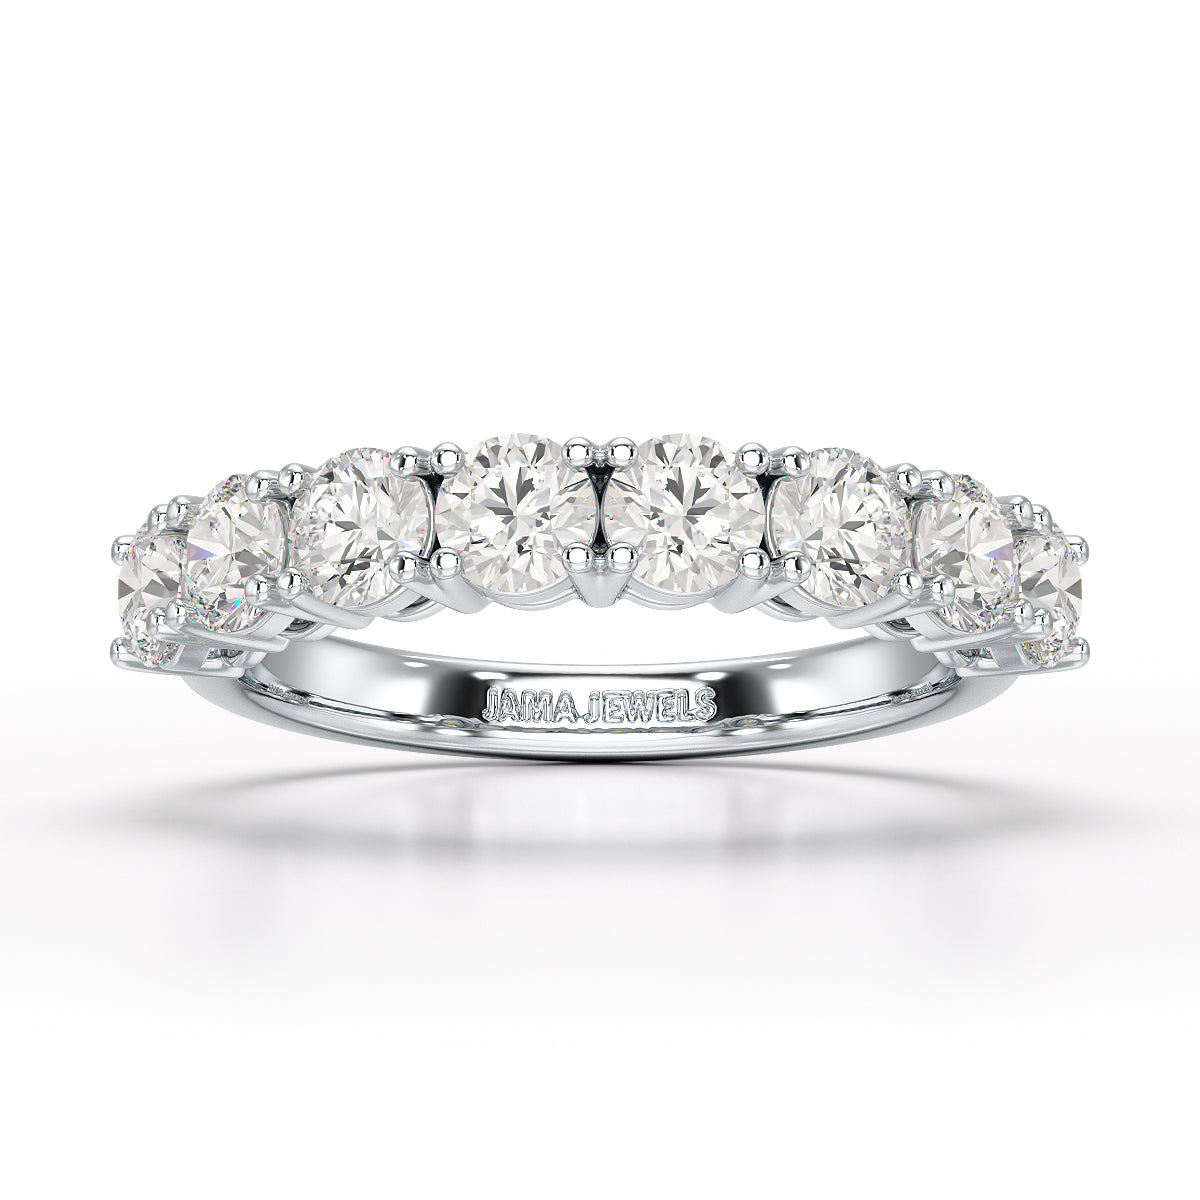 1.84 CT Round Cut Lab Diamonds White Engagement Ring